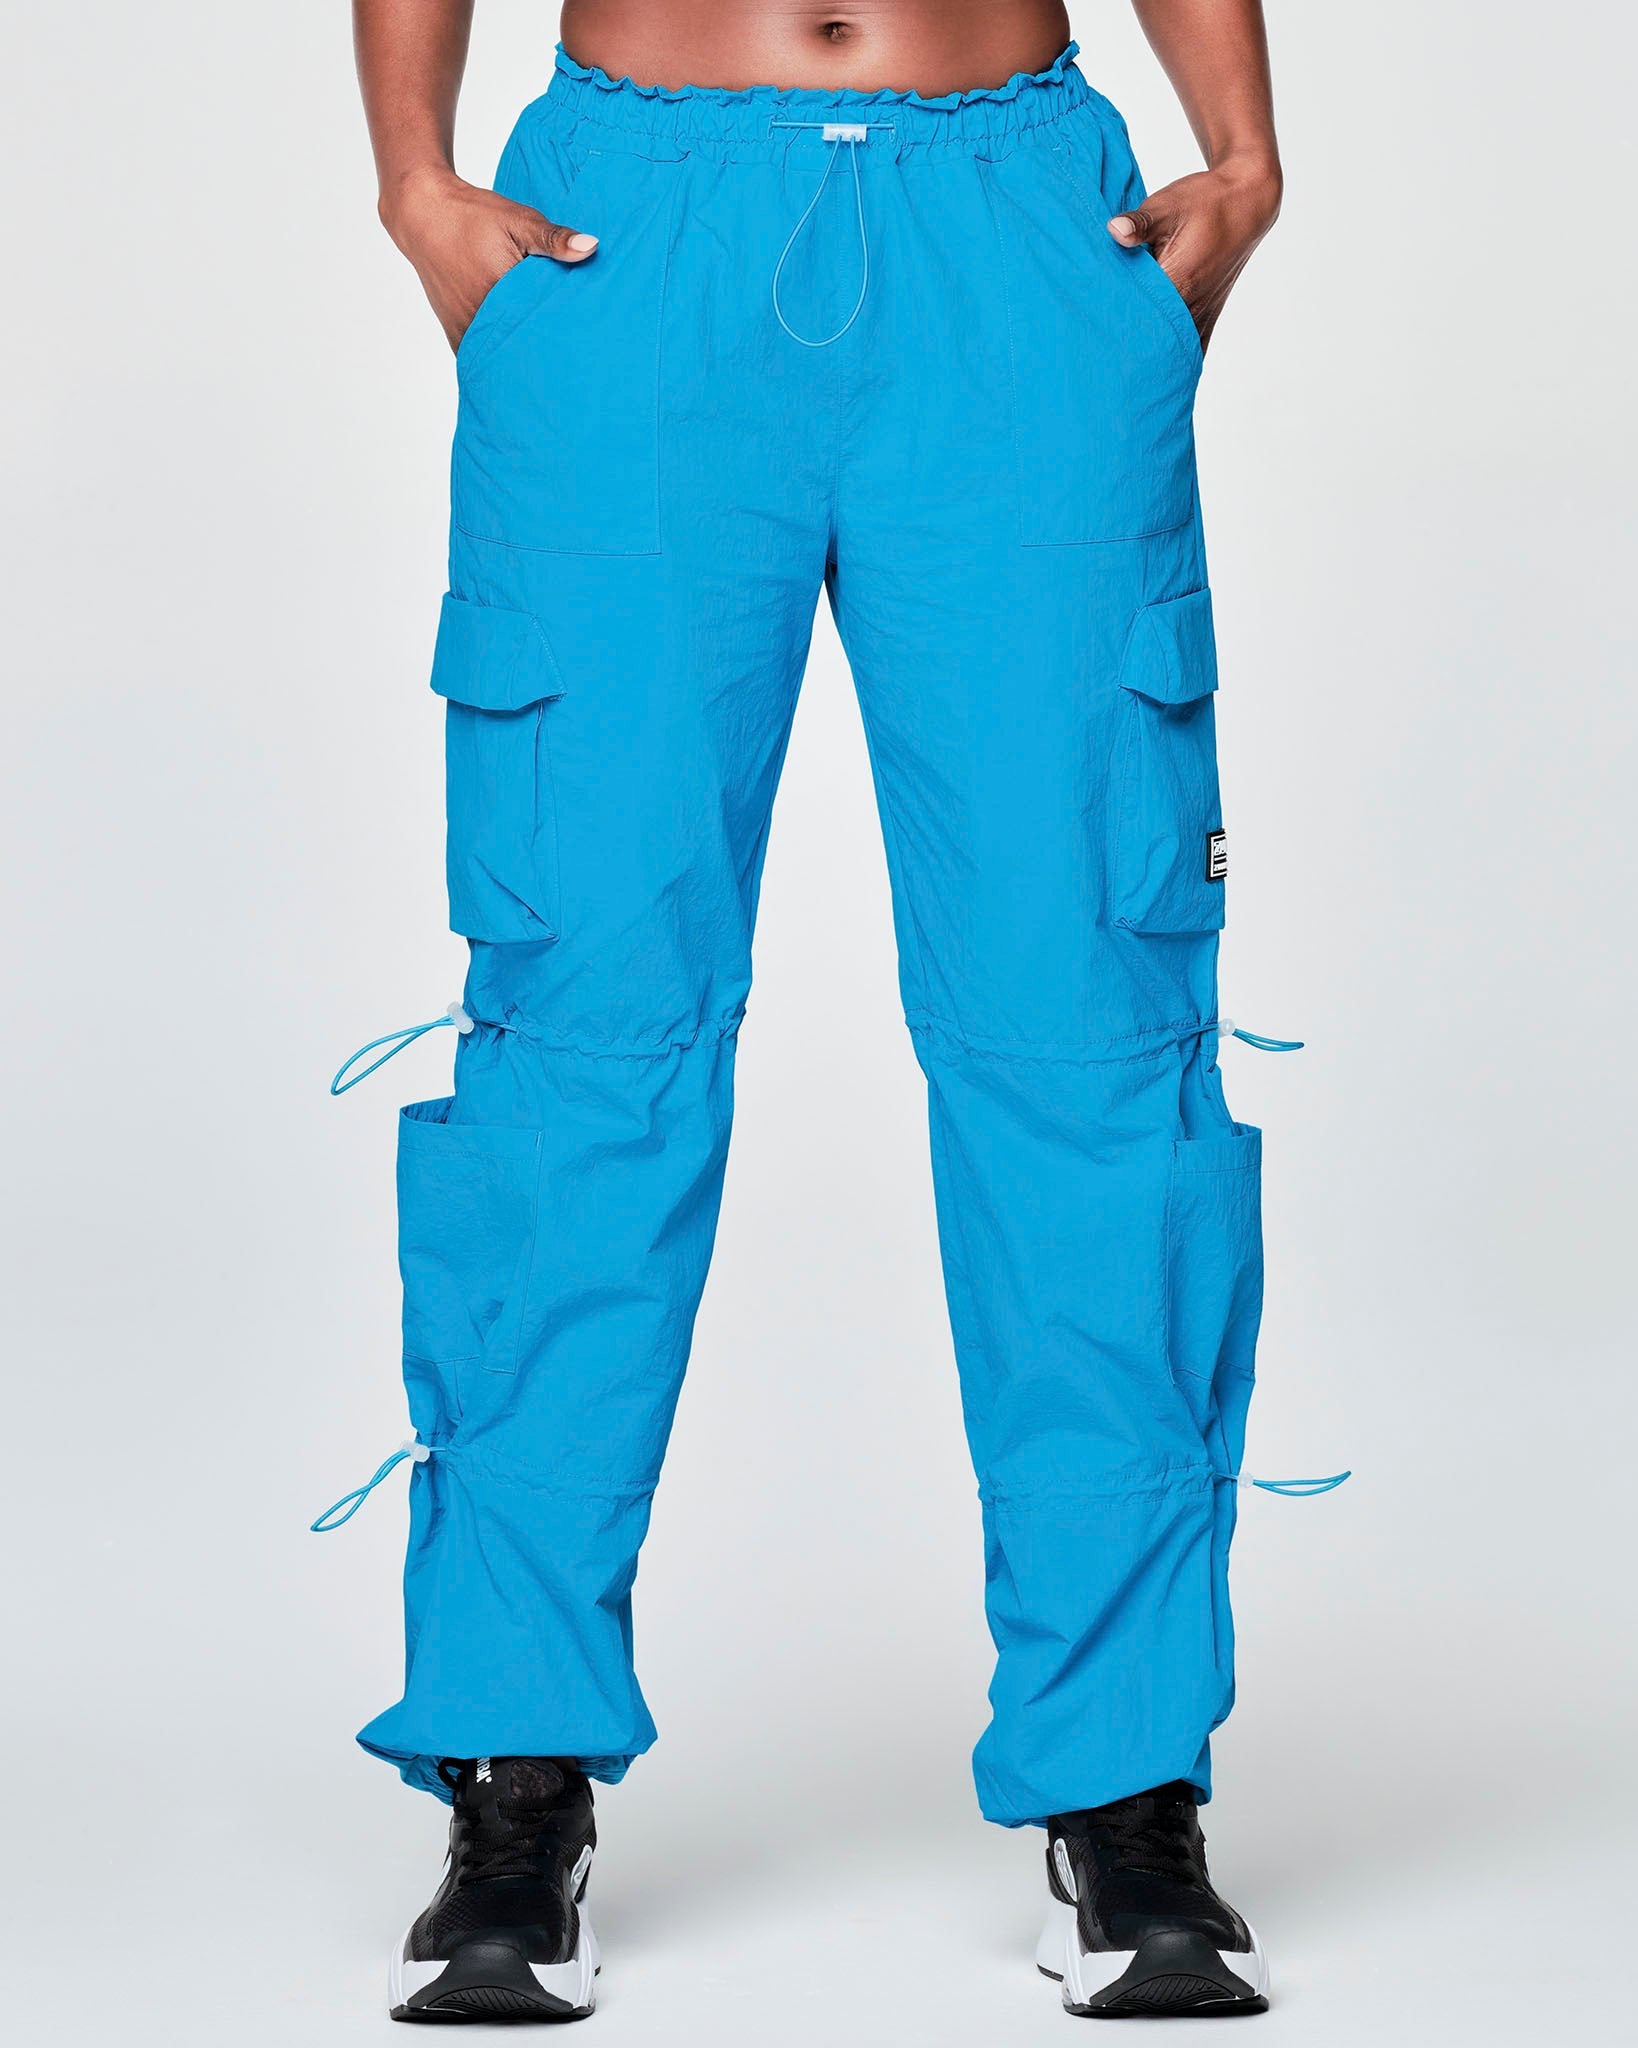  Zumba Fitness Women's Soft-N-Stretch Cargo Pants, So Samba  Pink, X-Small : Clothing, Shoes & Jewelry